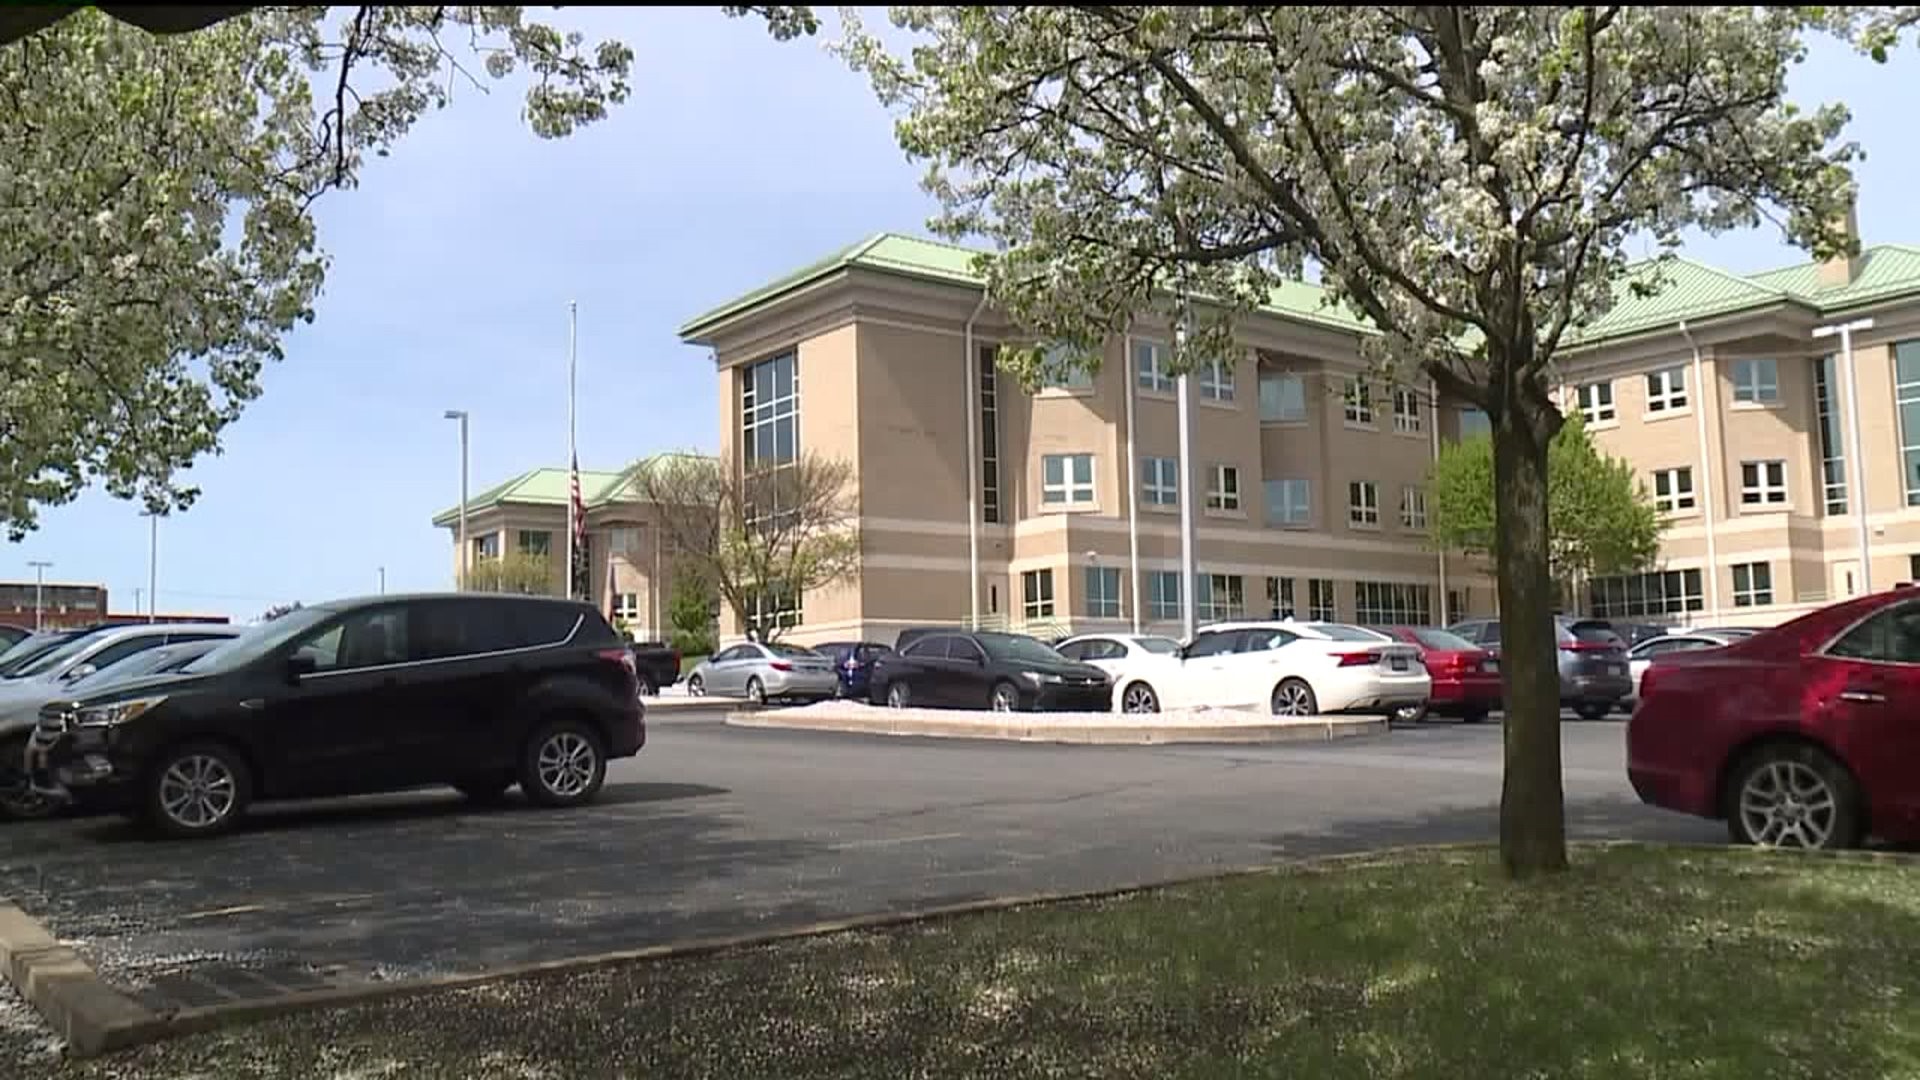 Death at Veterans Center in Scranton Under Investigation